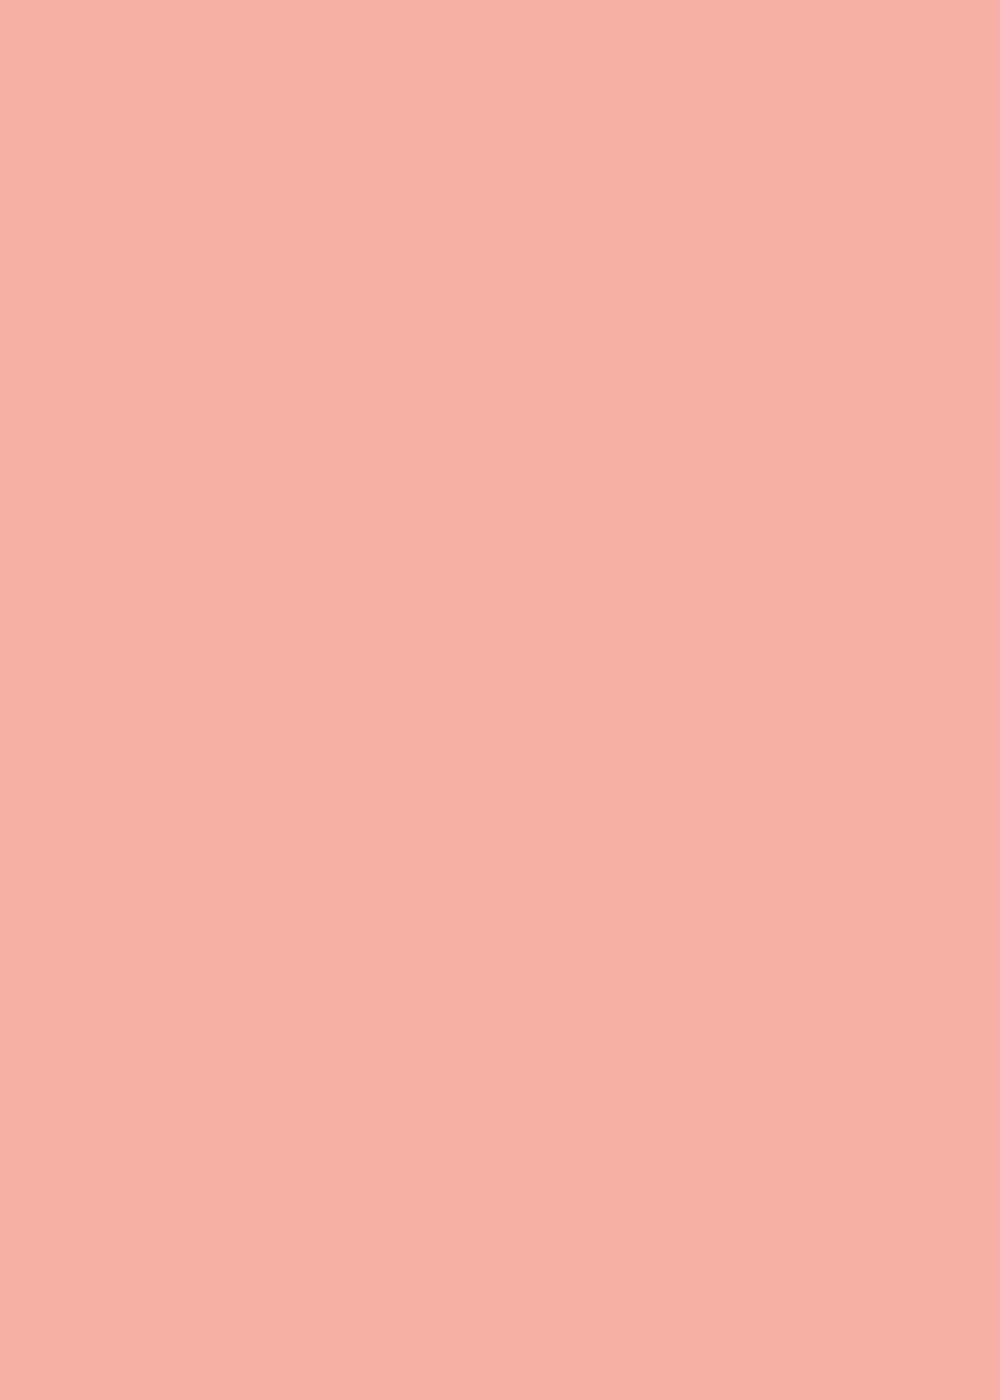 Meterware Klebefolie Uni rosa